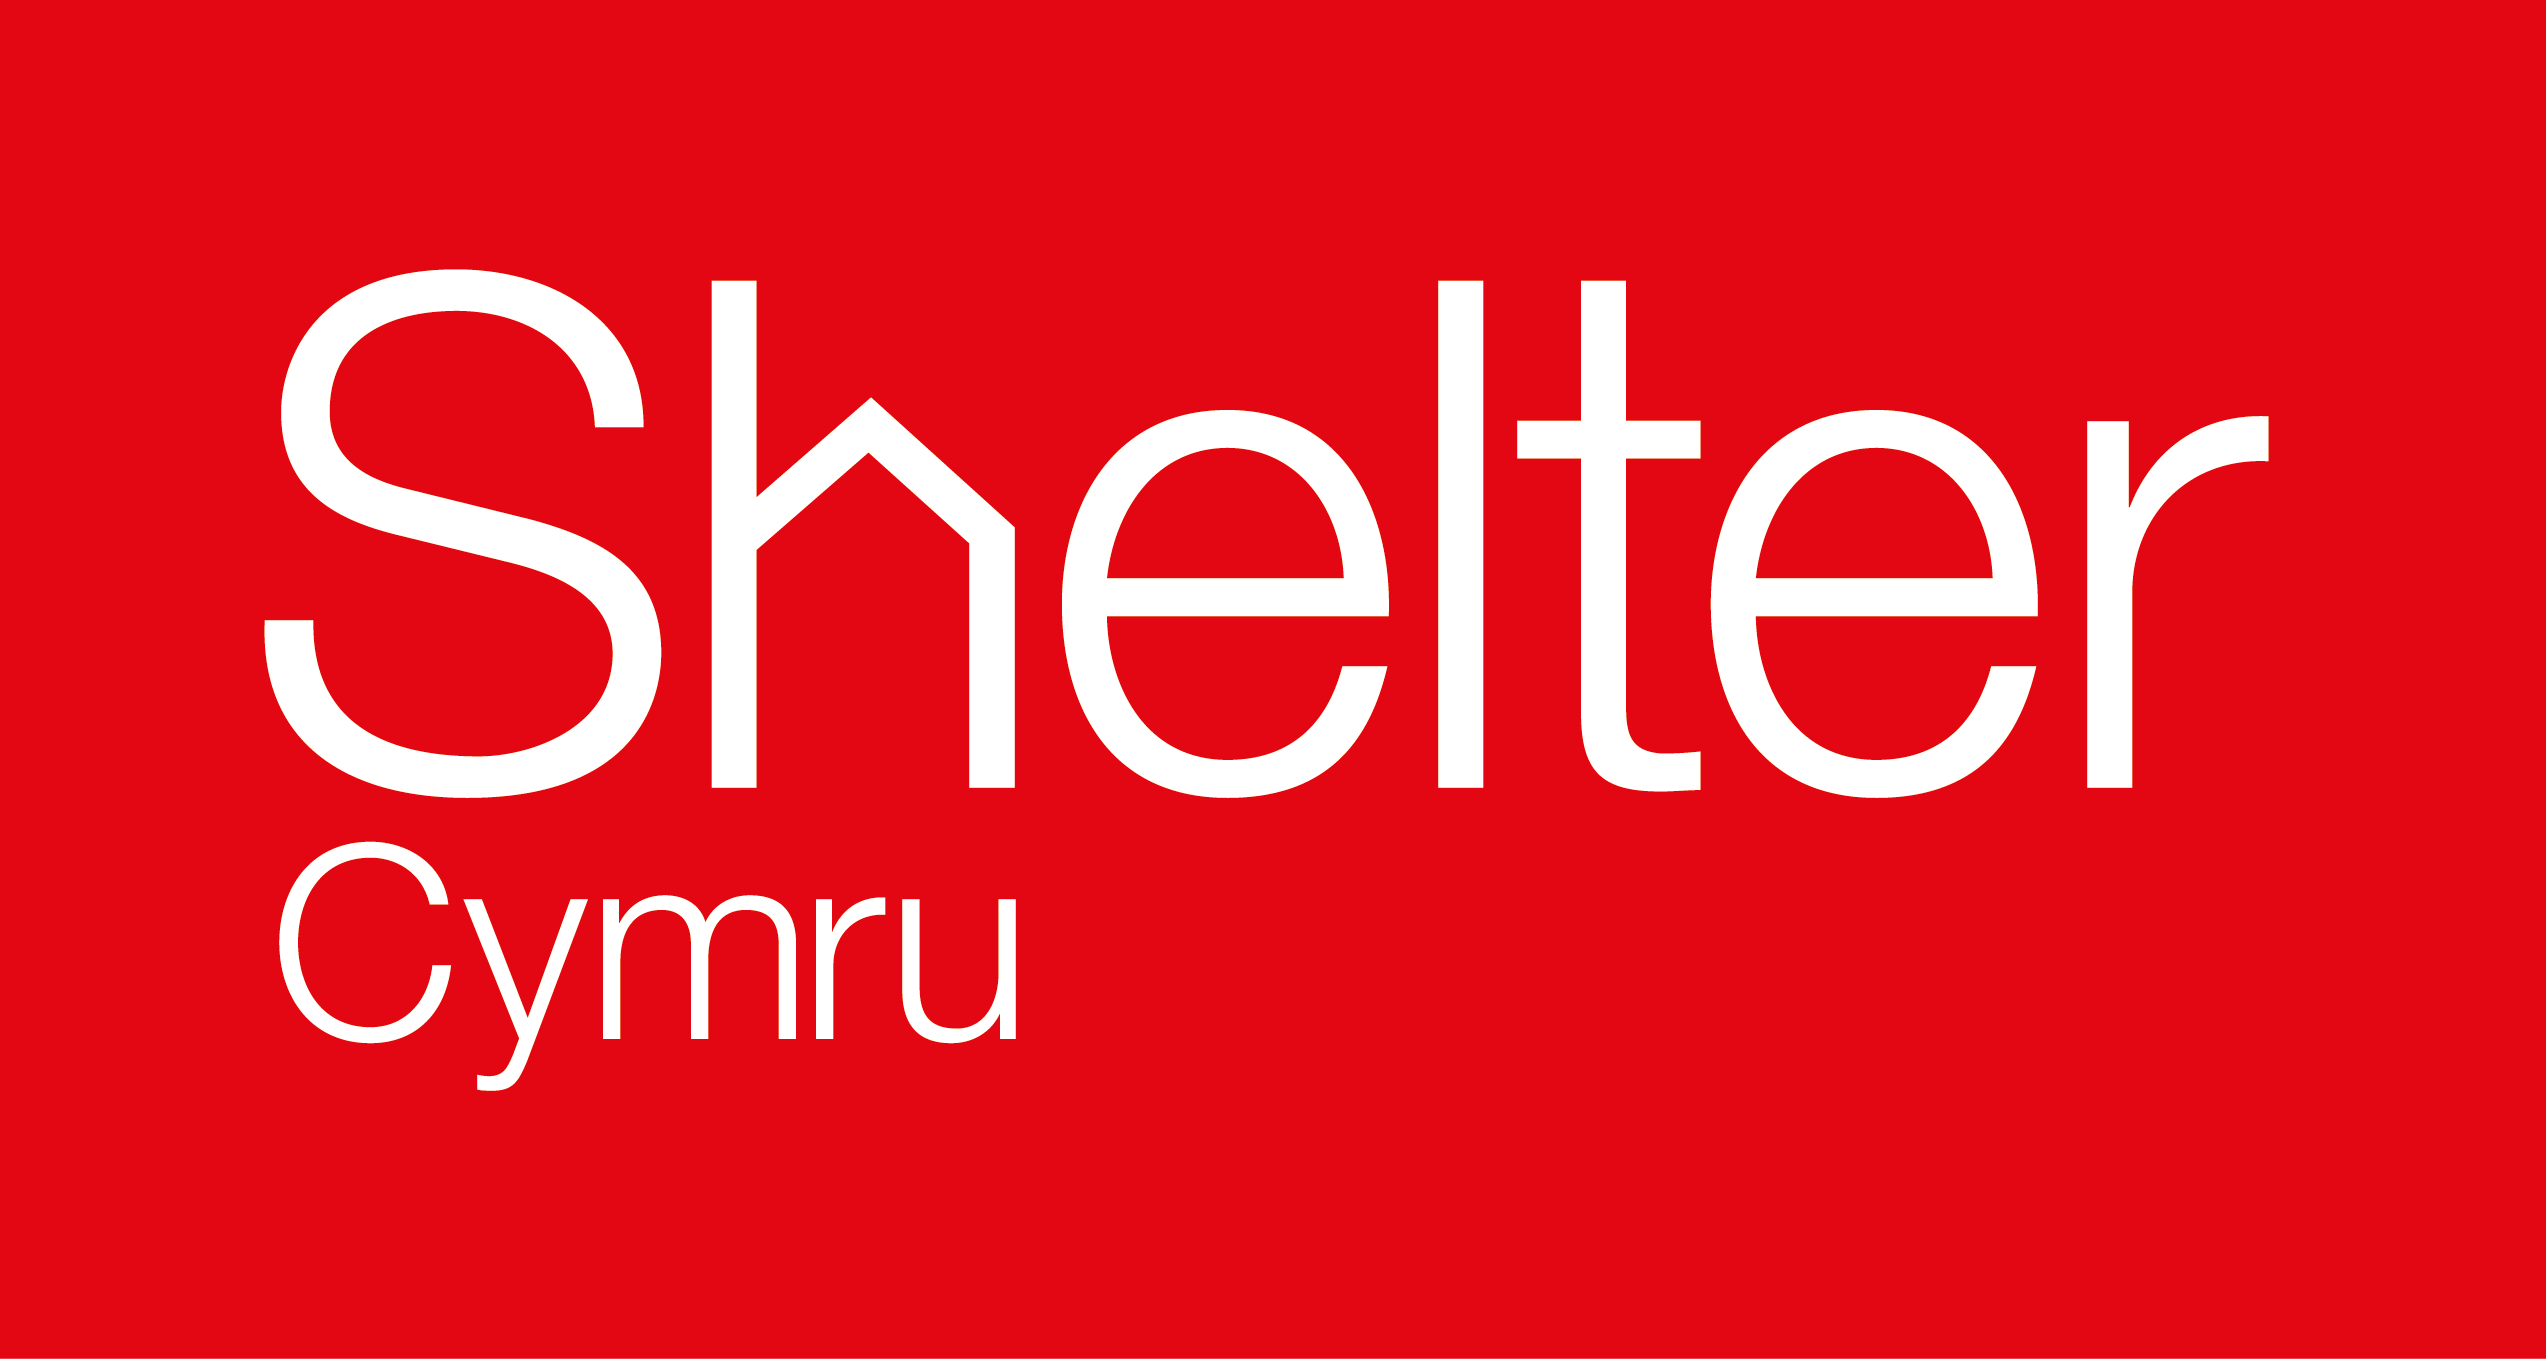 White with Red Background Logo - Shelter Cymru logo on red background